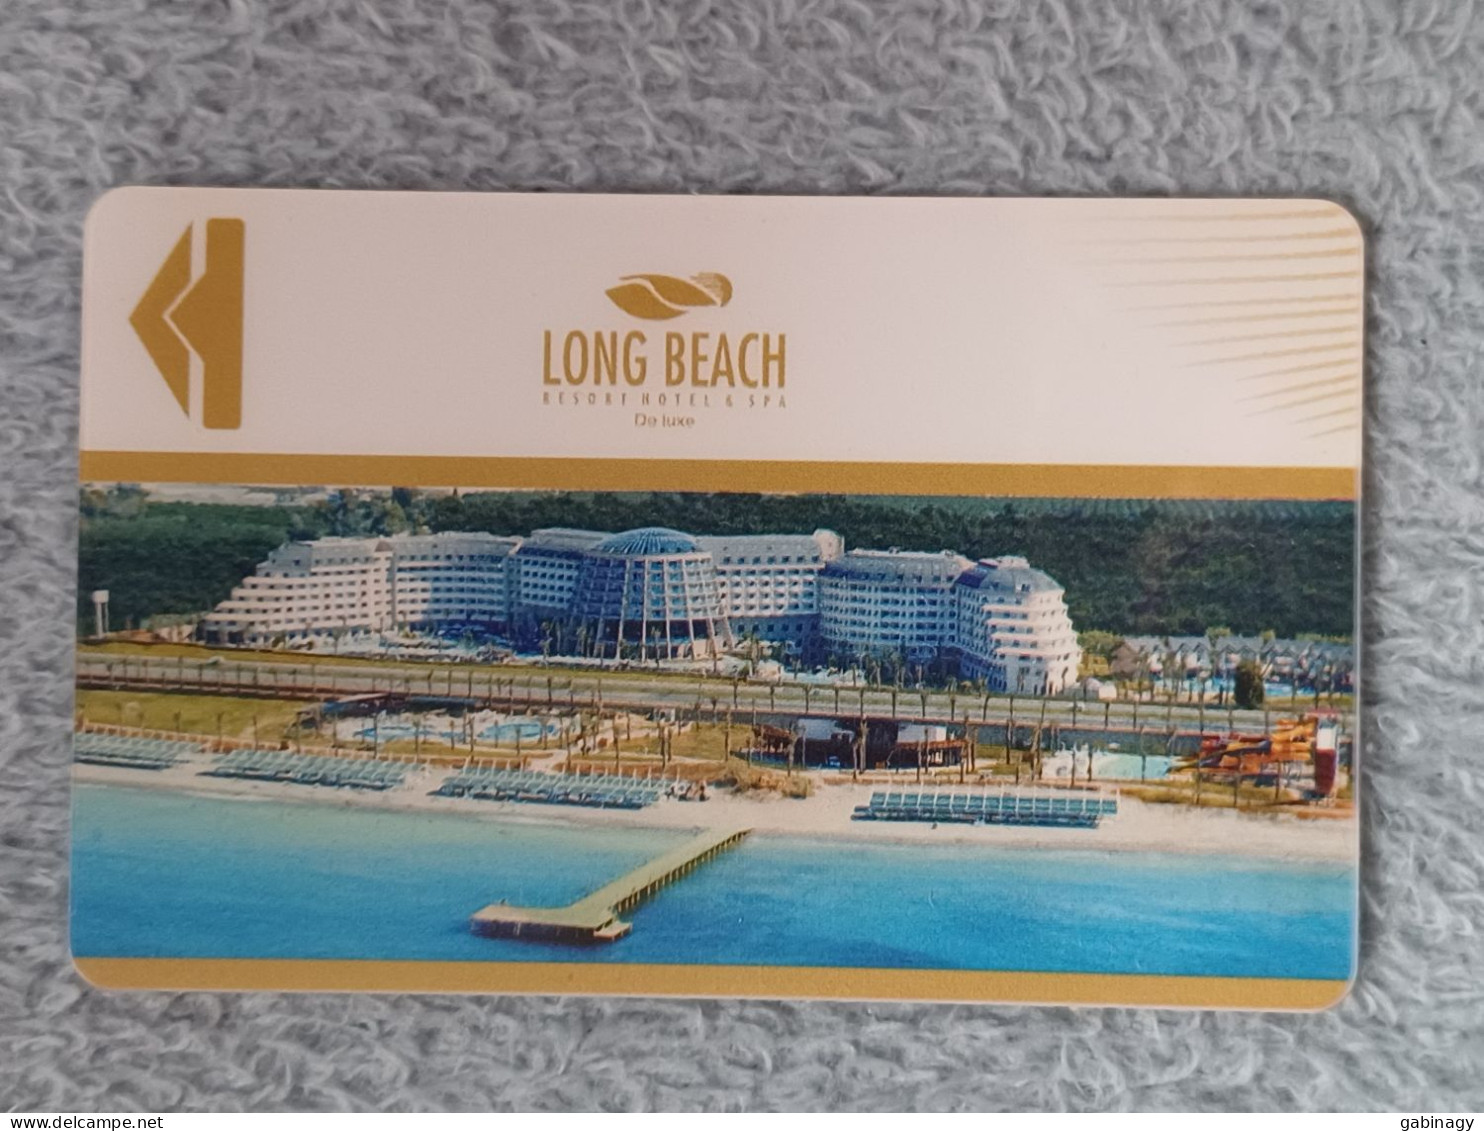 HOTEL KEYS - 2566 - TURKEY - LONG BEACH - Cartas De Hotels